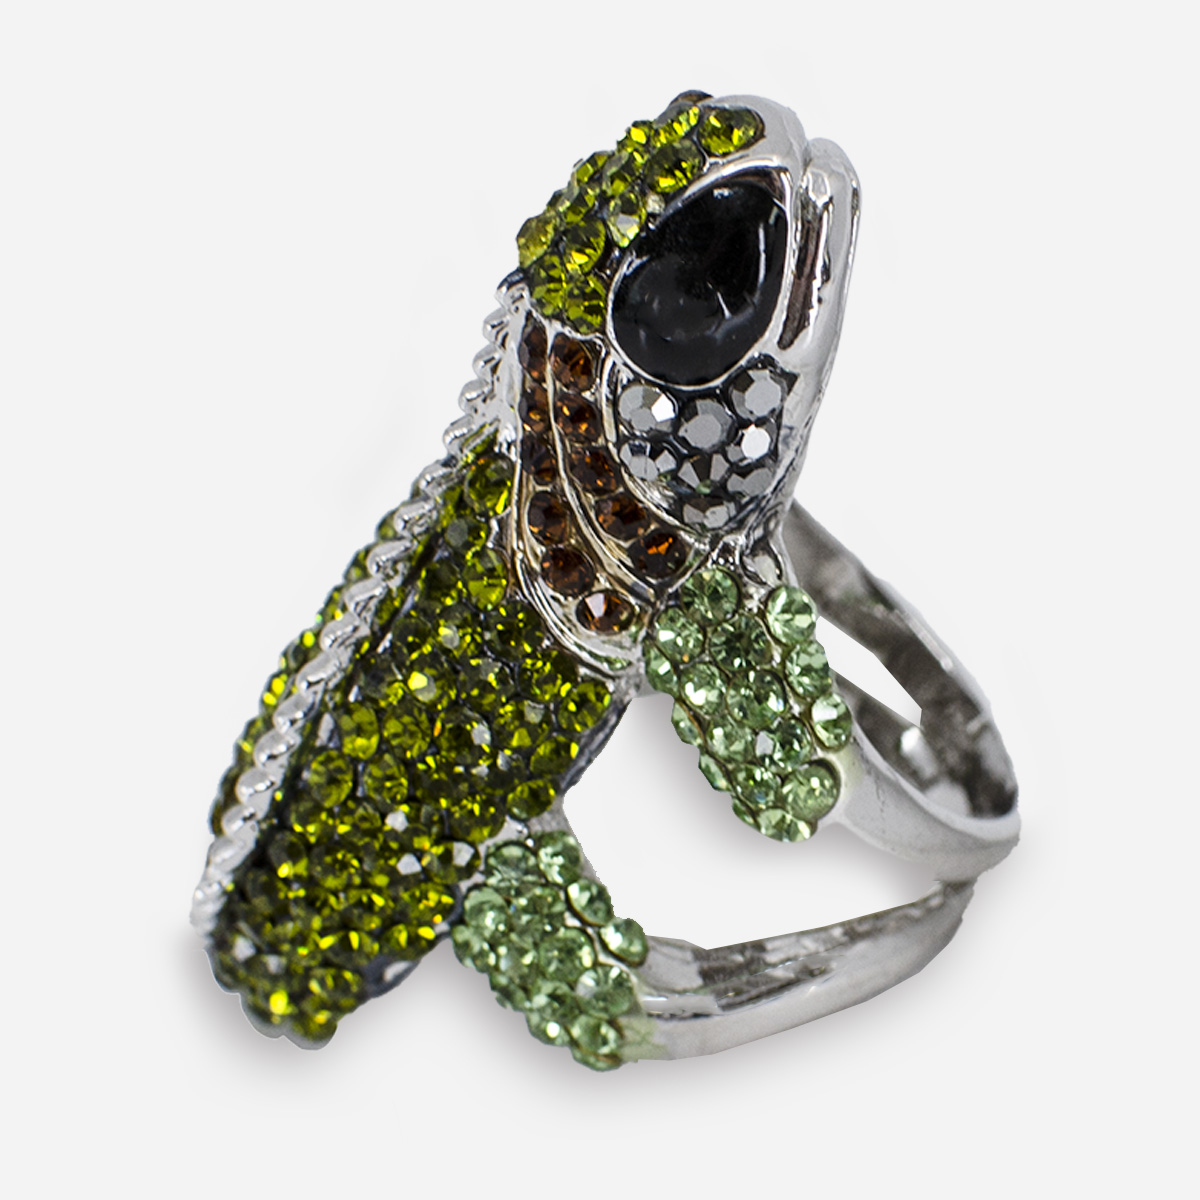 Green crystal lizard ring